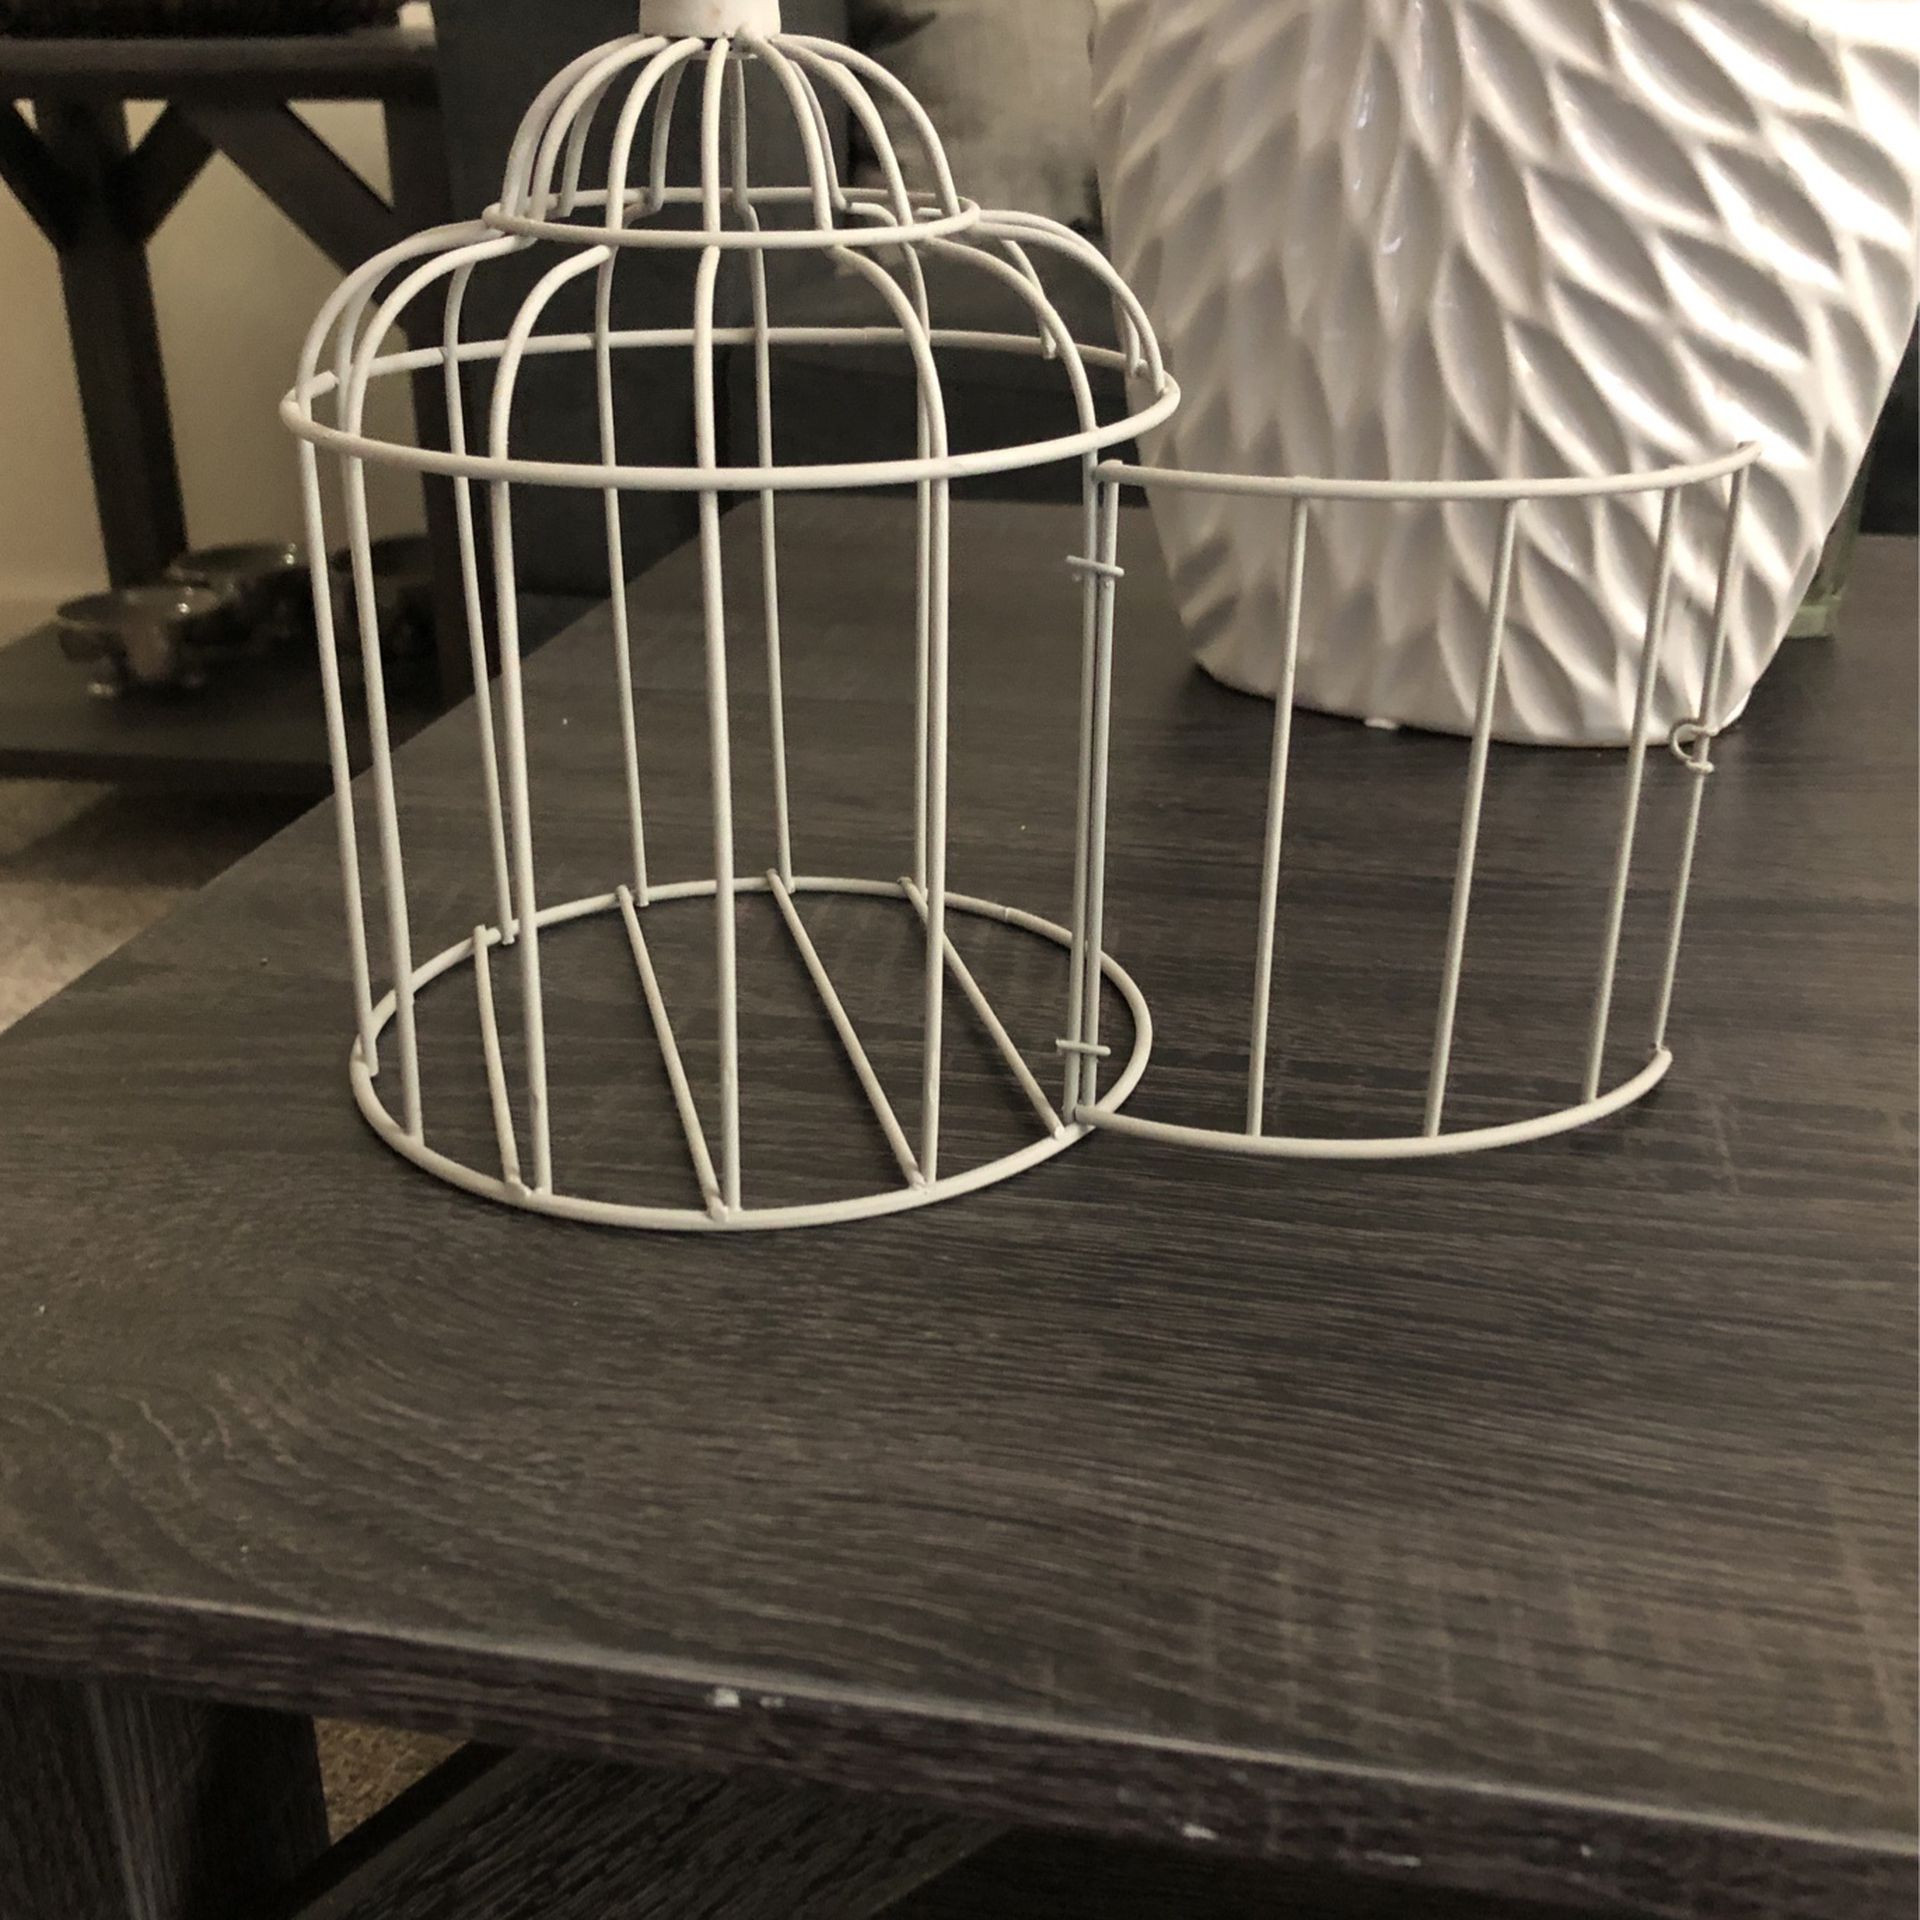 Small bird Cage 